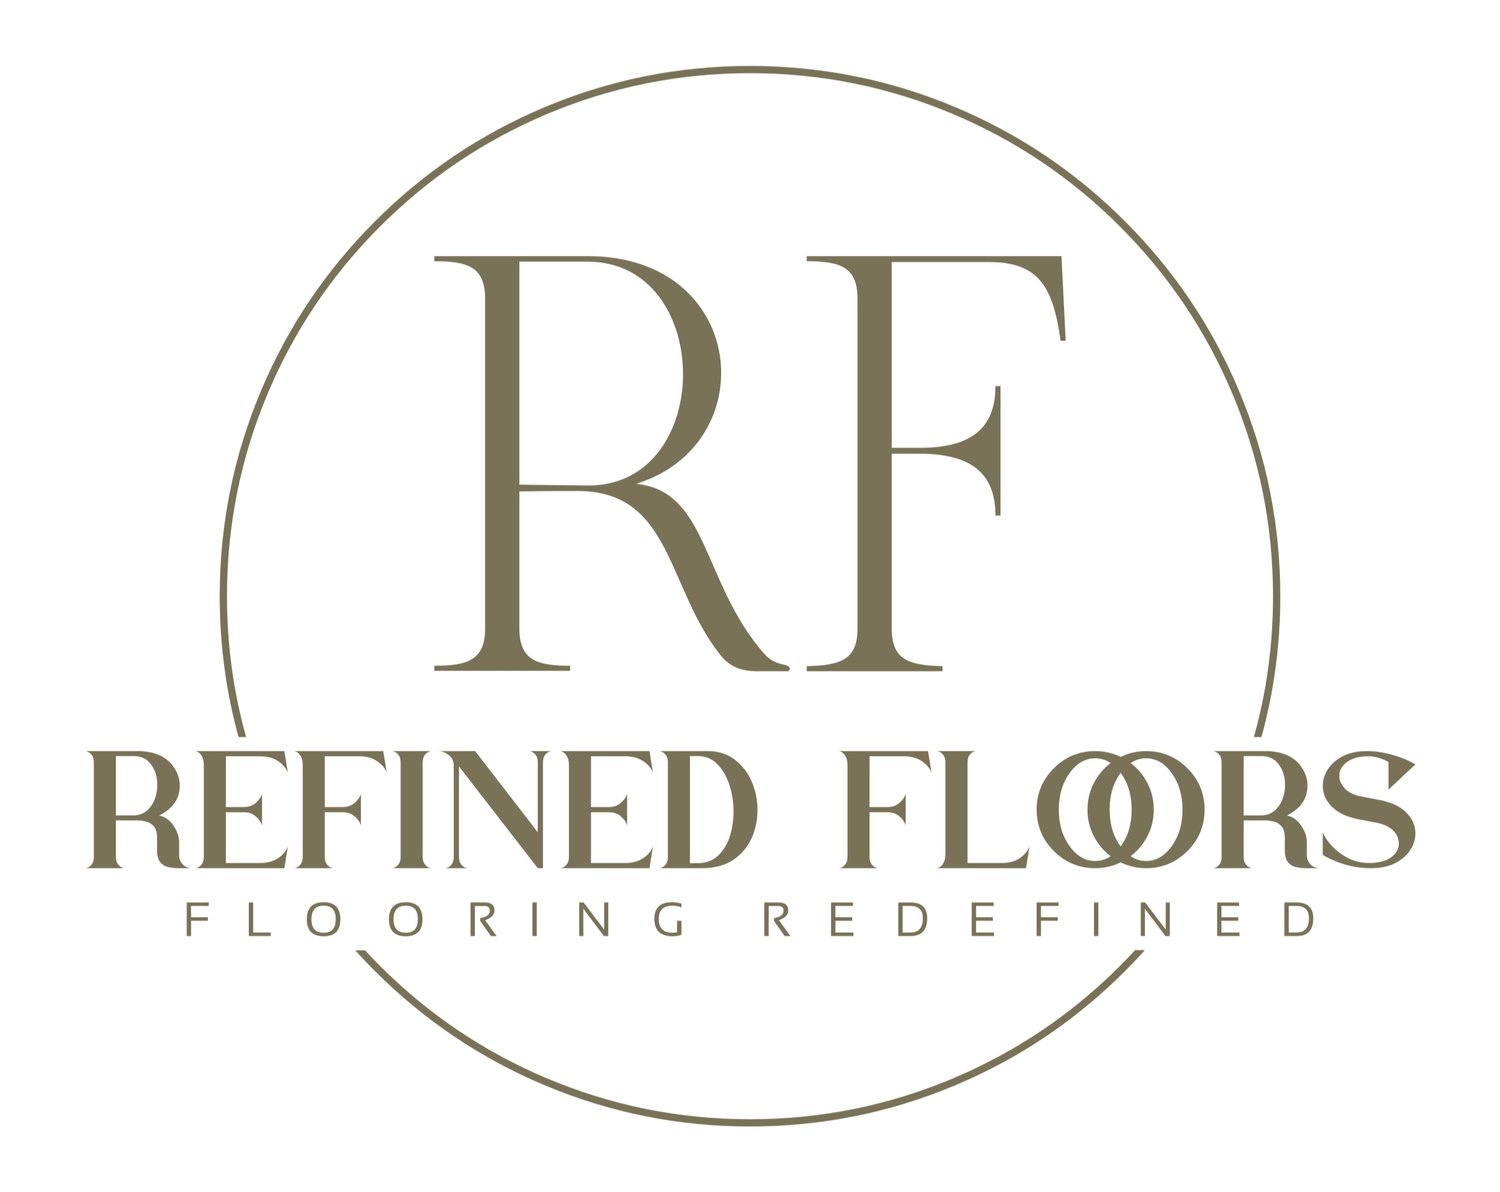 Refined Floors - Mobile Flooring Showroom - Williamsburg, Virginia